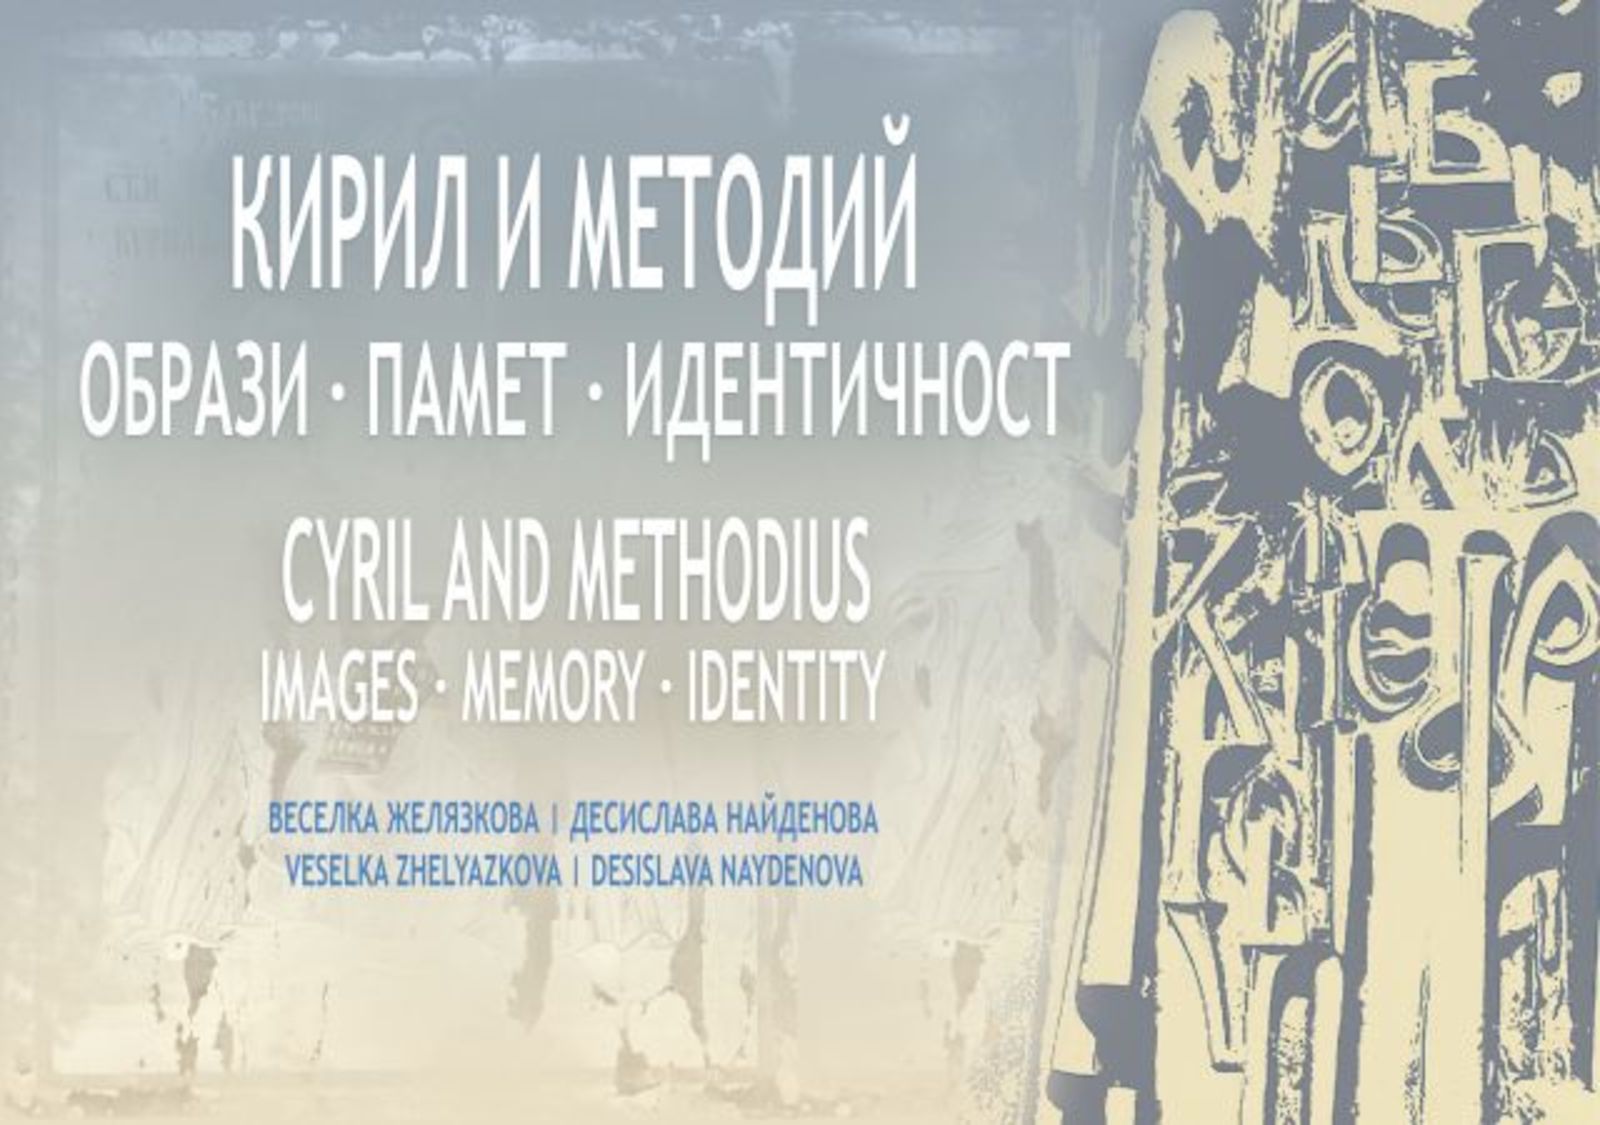 PRESENTATION OF THE ALBUM CYRIL AND METHODIUS. IMAGES. MEMORY. IDENTITY / CYRIL AND METHODIUS. IMAGES. MEMORY. IDENTITY 